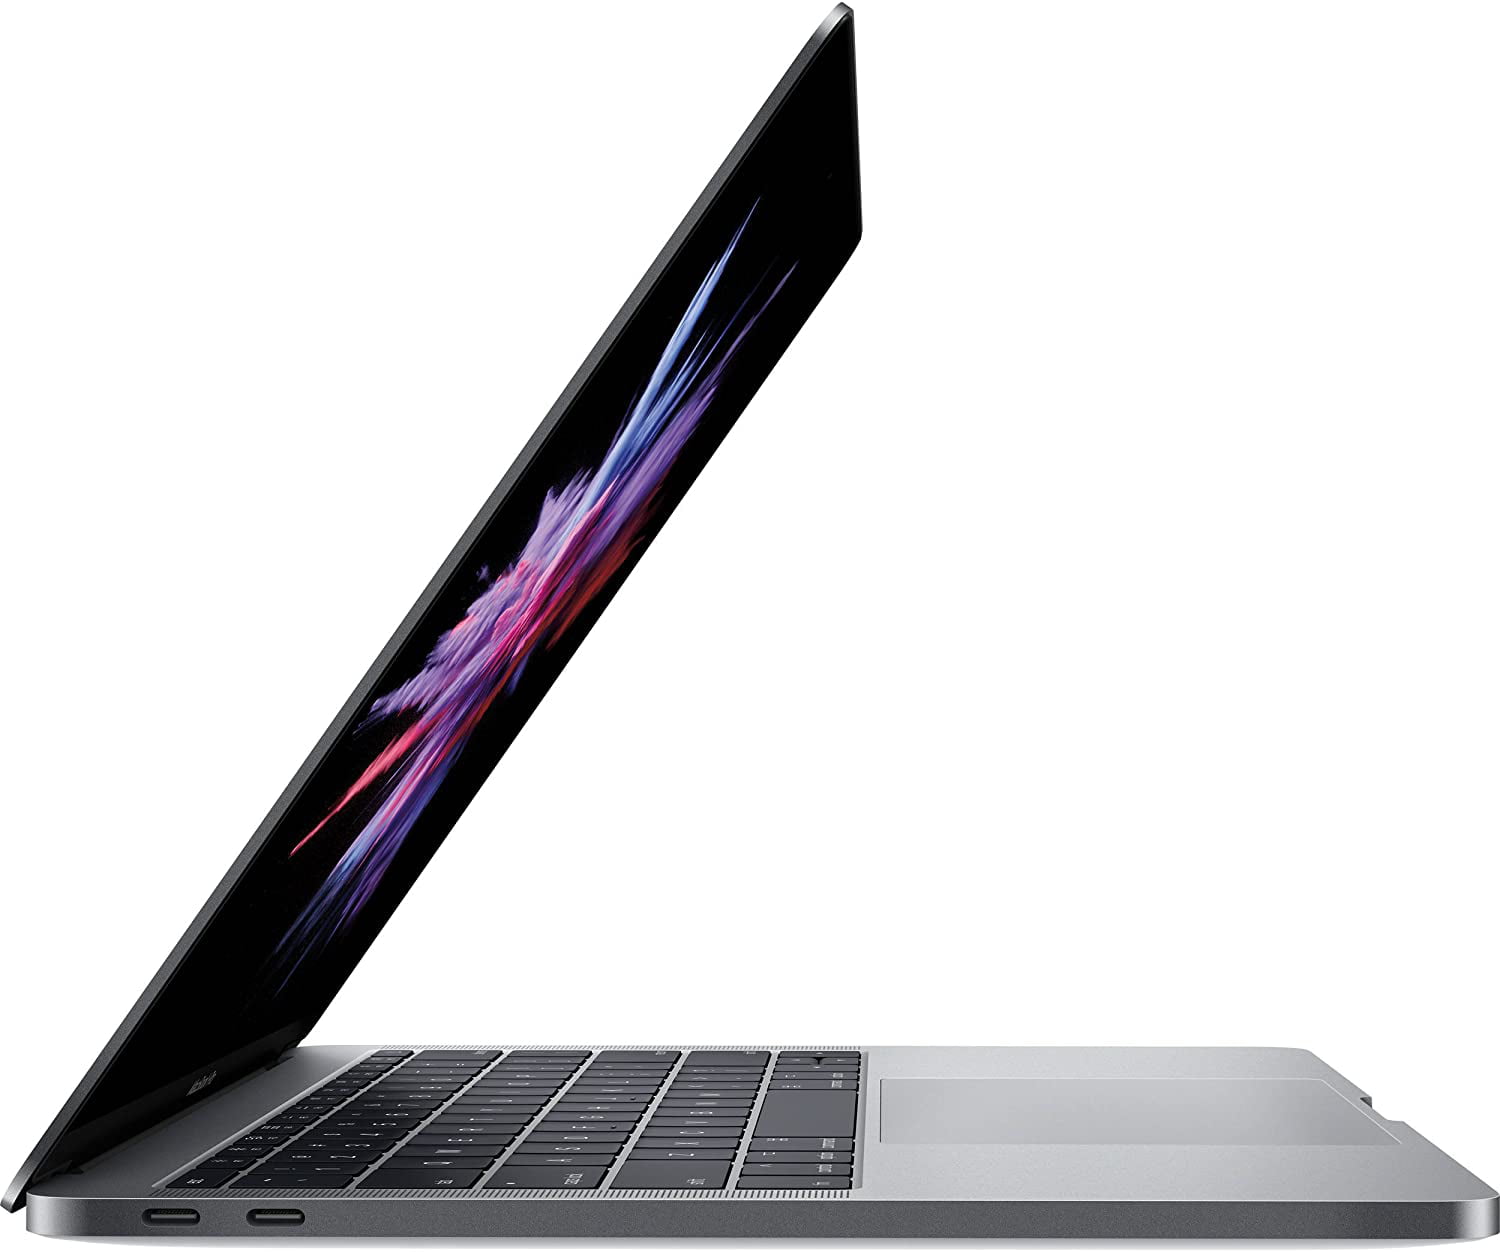 congestion Becks Improve Apple MacBook Air Laptop, 13.3" Retina Display with Touch Bar, Intel Core  i5, 8GB RAM, 256GB SSD, iOS X, Space Gray, MPXQ2LL/A - Walmart.com